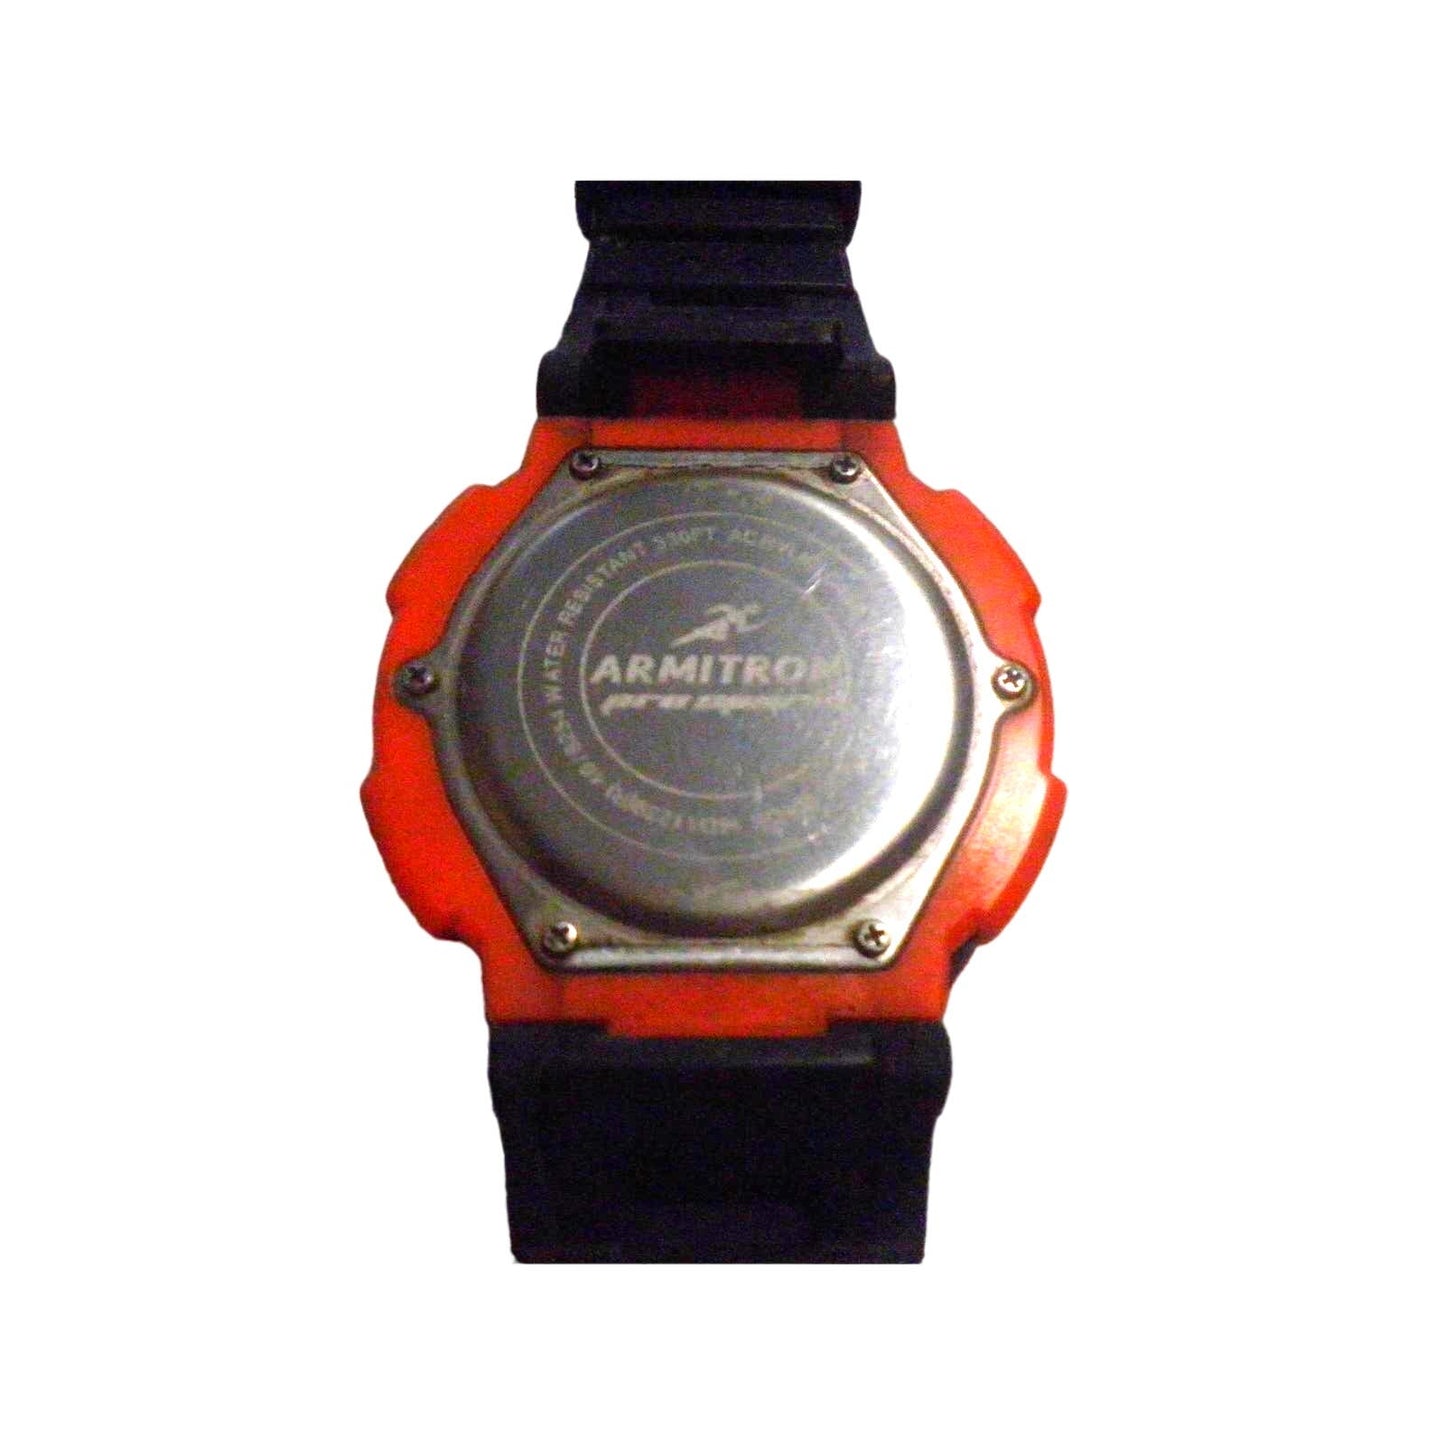 Armitron Pro-Sport Digital Watch 51mm Blk/Or 100M Timer MD11239(R) Needs Battery